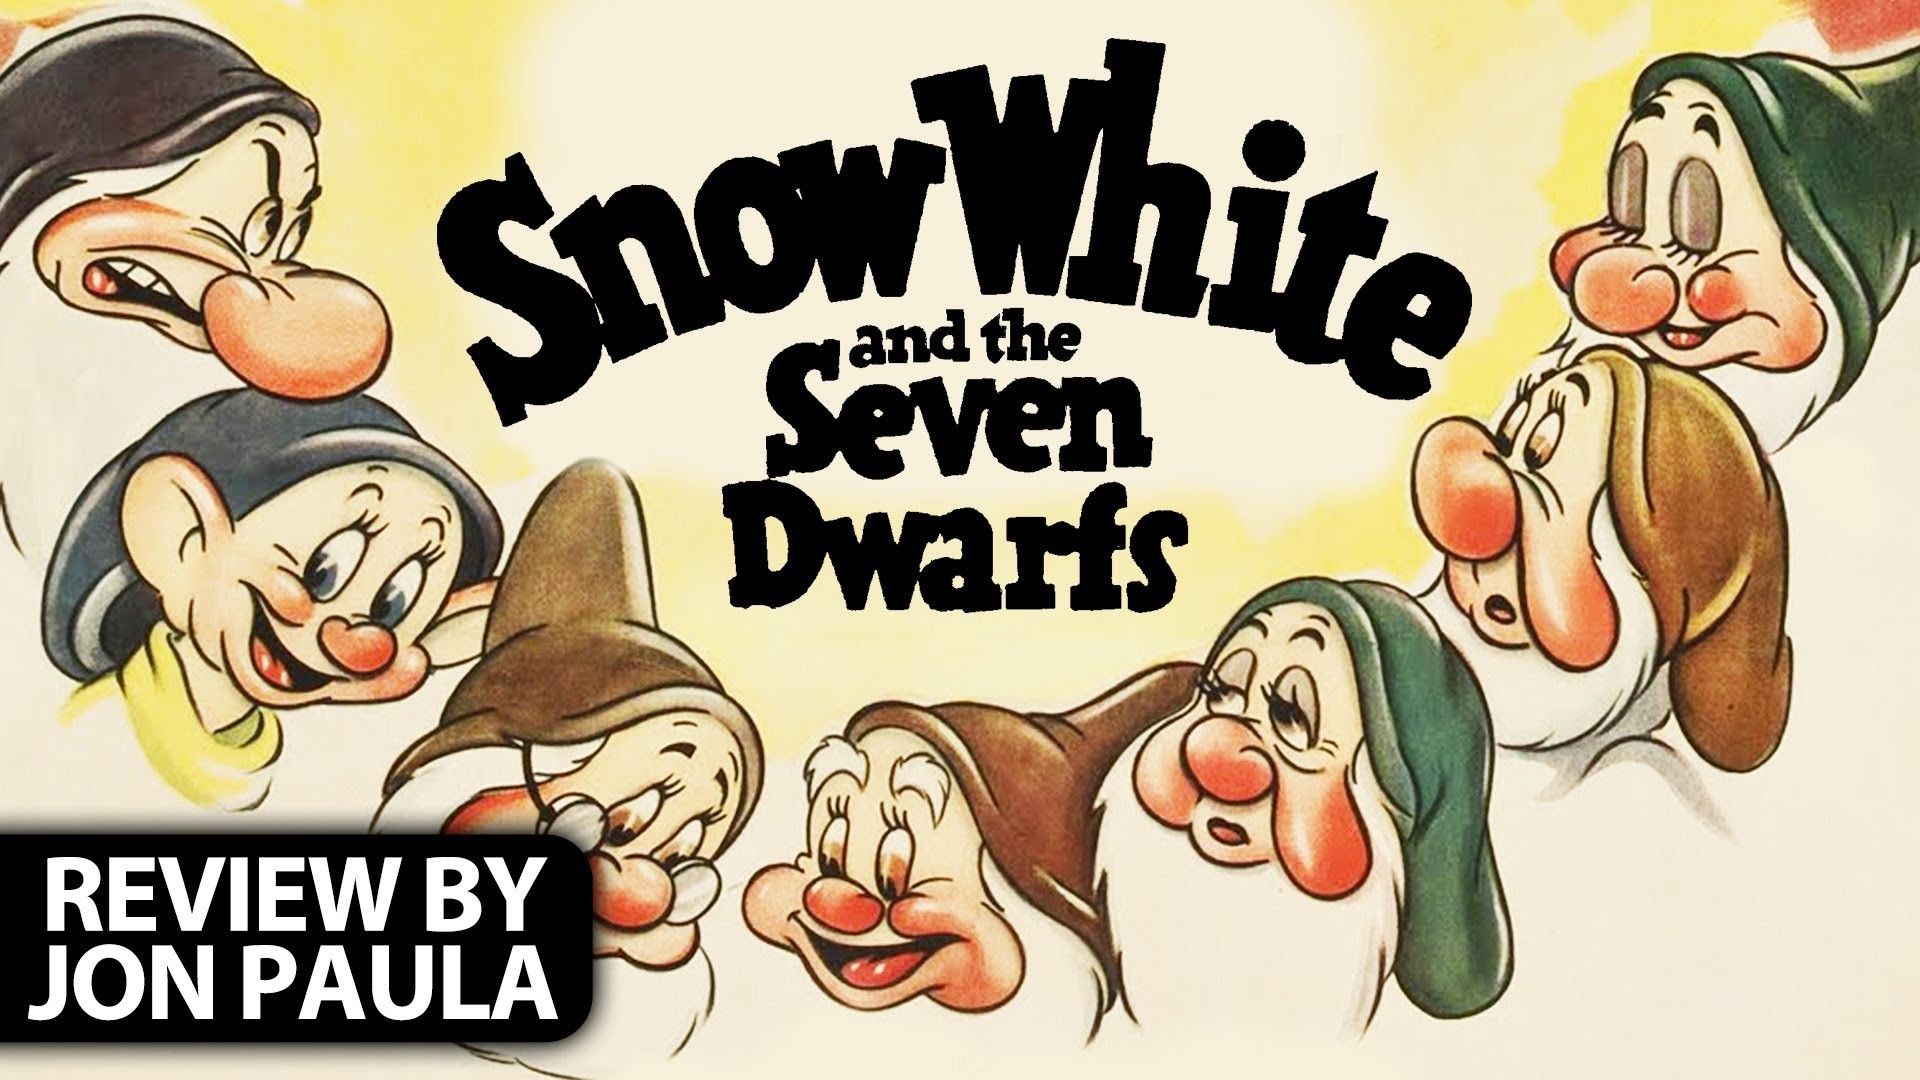 Snow White And The Seven Dwarfs Wallpaper.